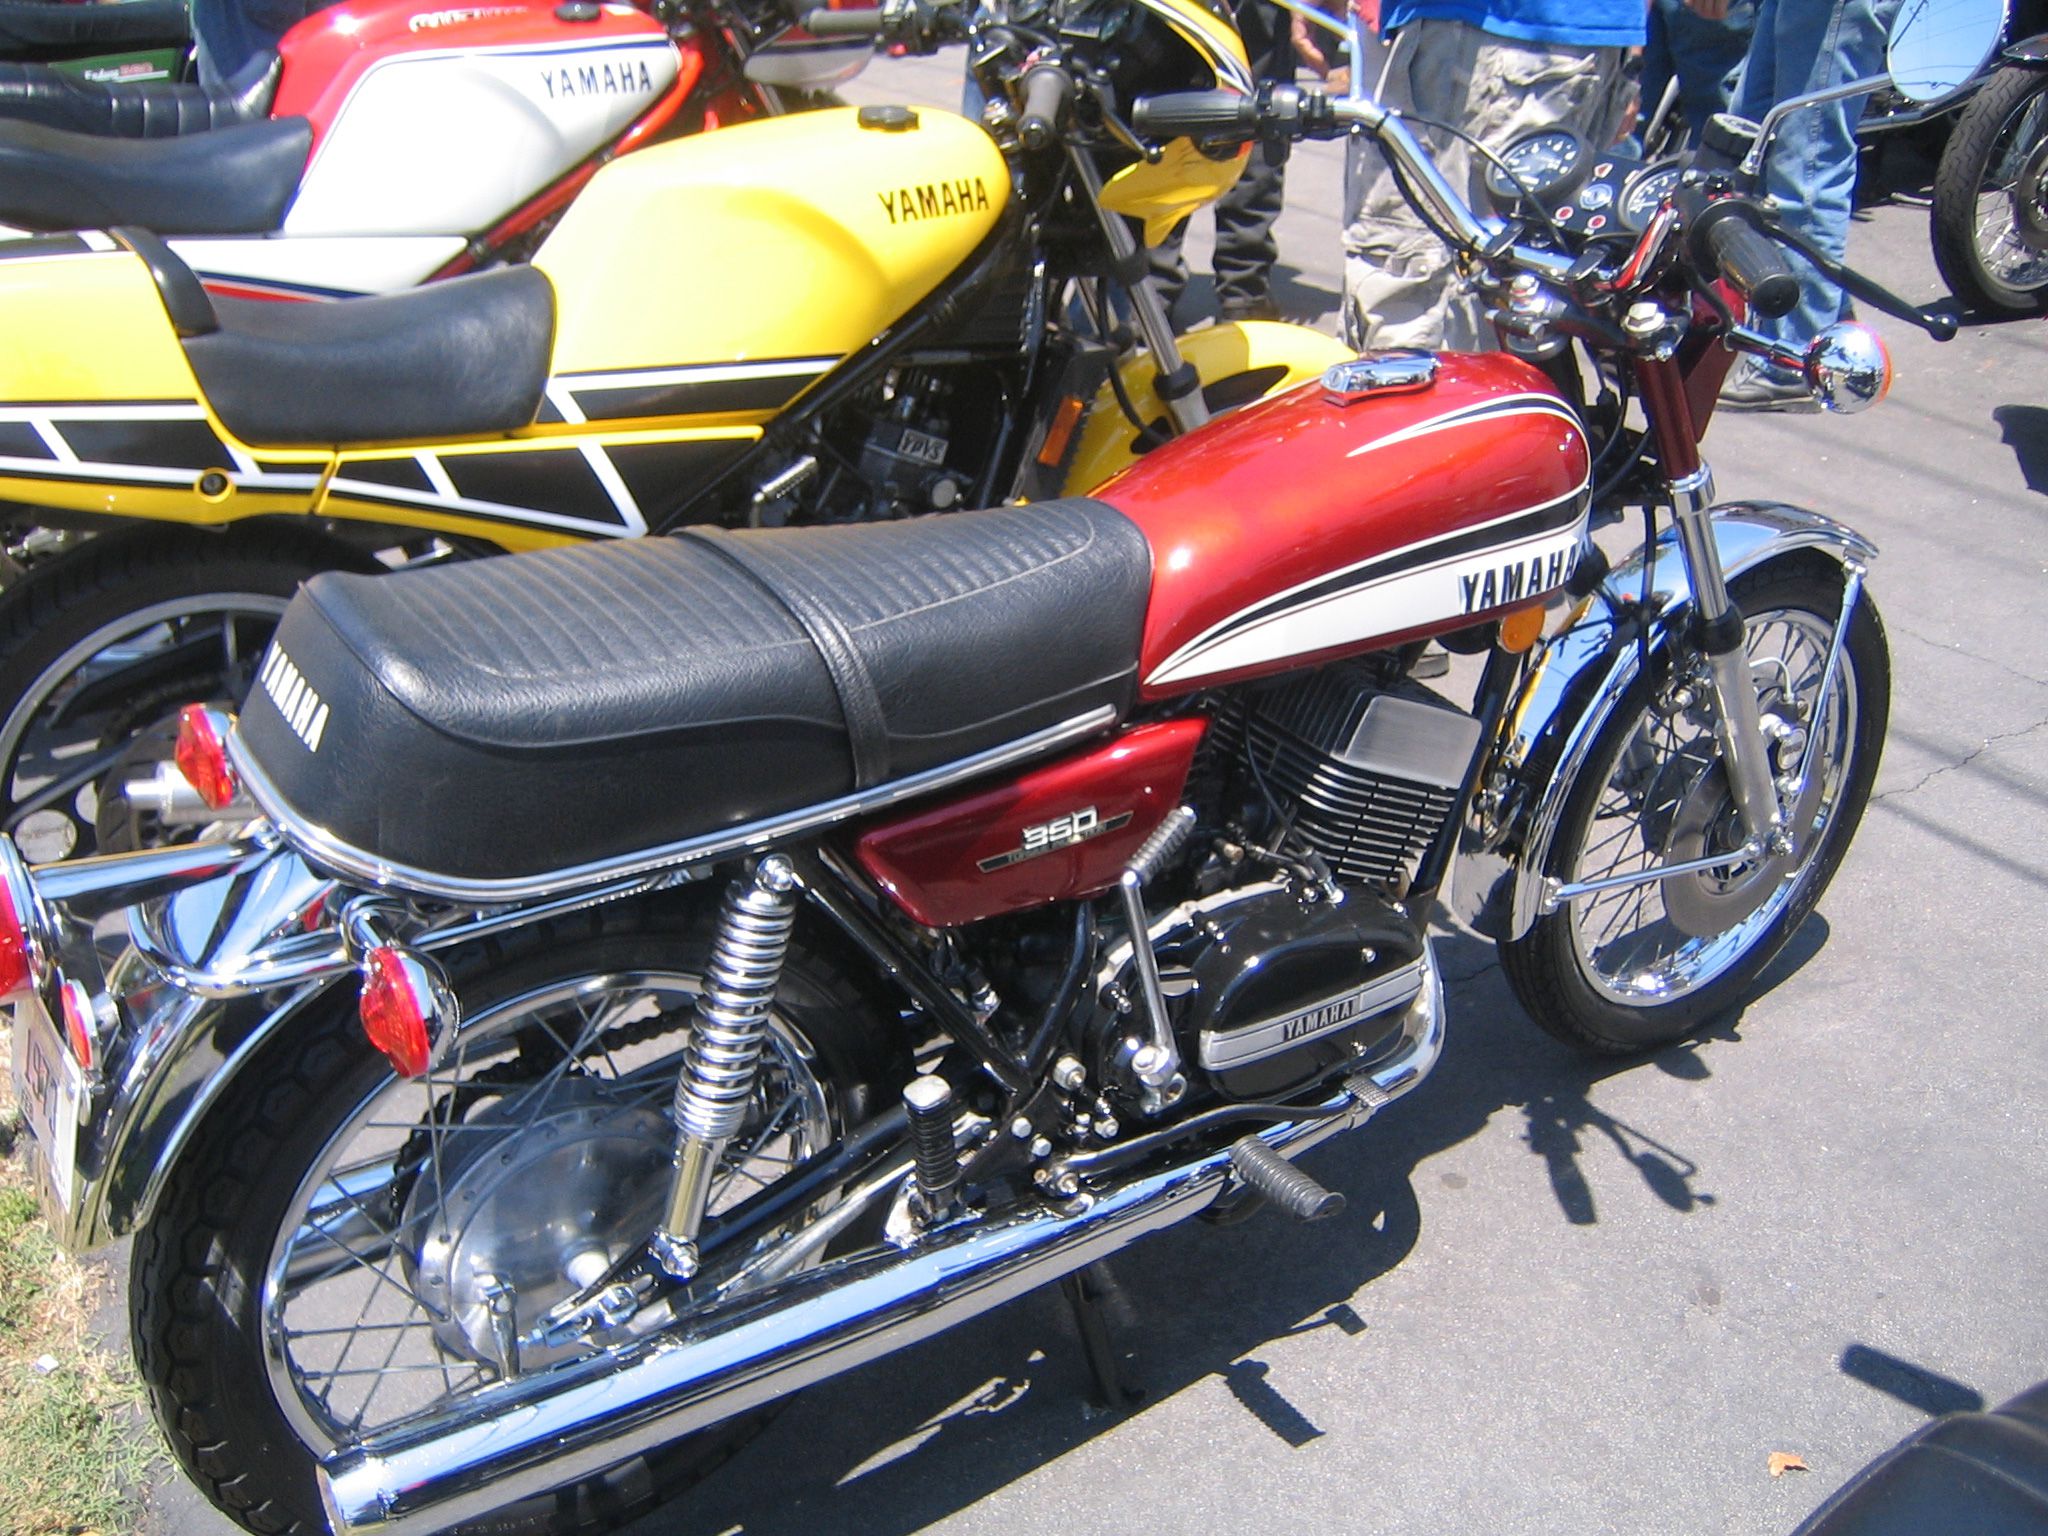 Yamaha Rd350 Motorcycle History Classics Remembered Cycle World